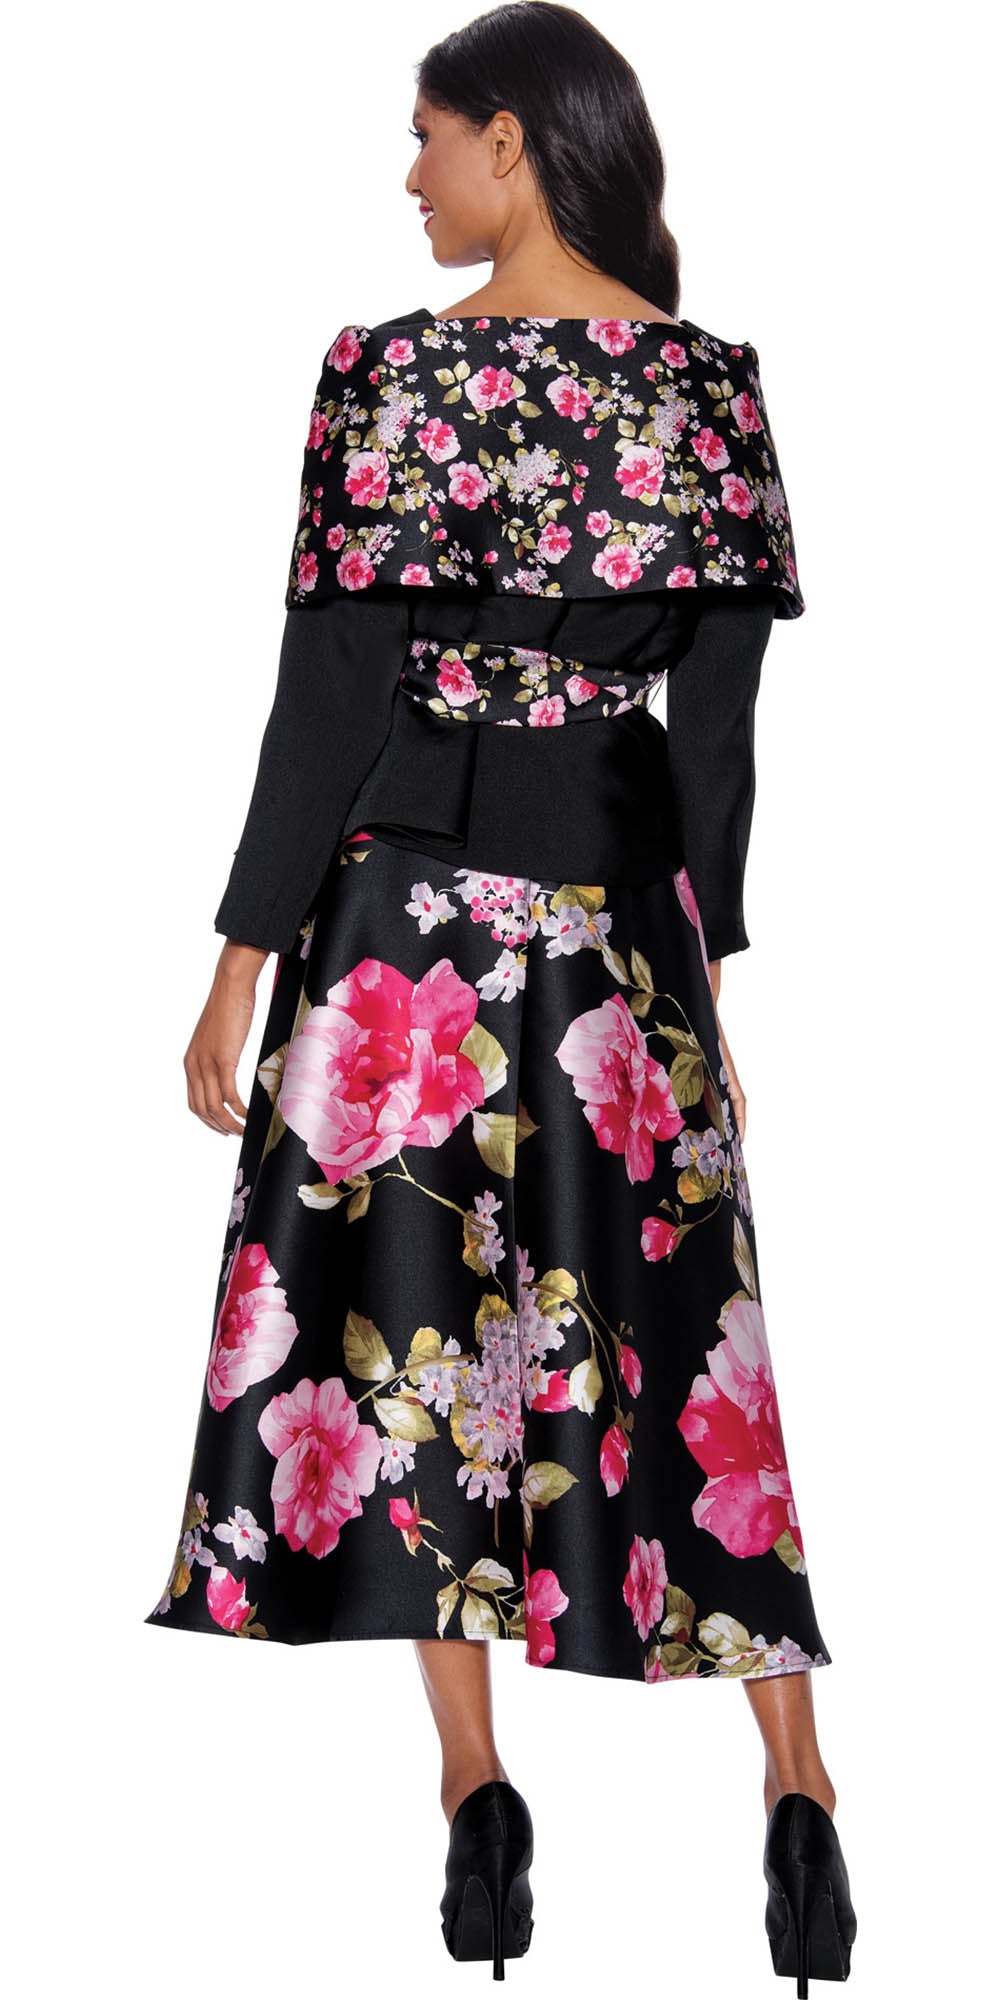 Stellar Looks - 1832 - Black Multi - Floral Print Twill 2pc Skirt Set